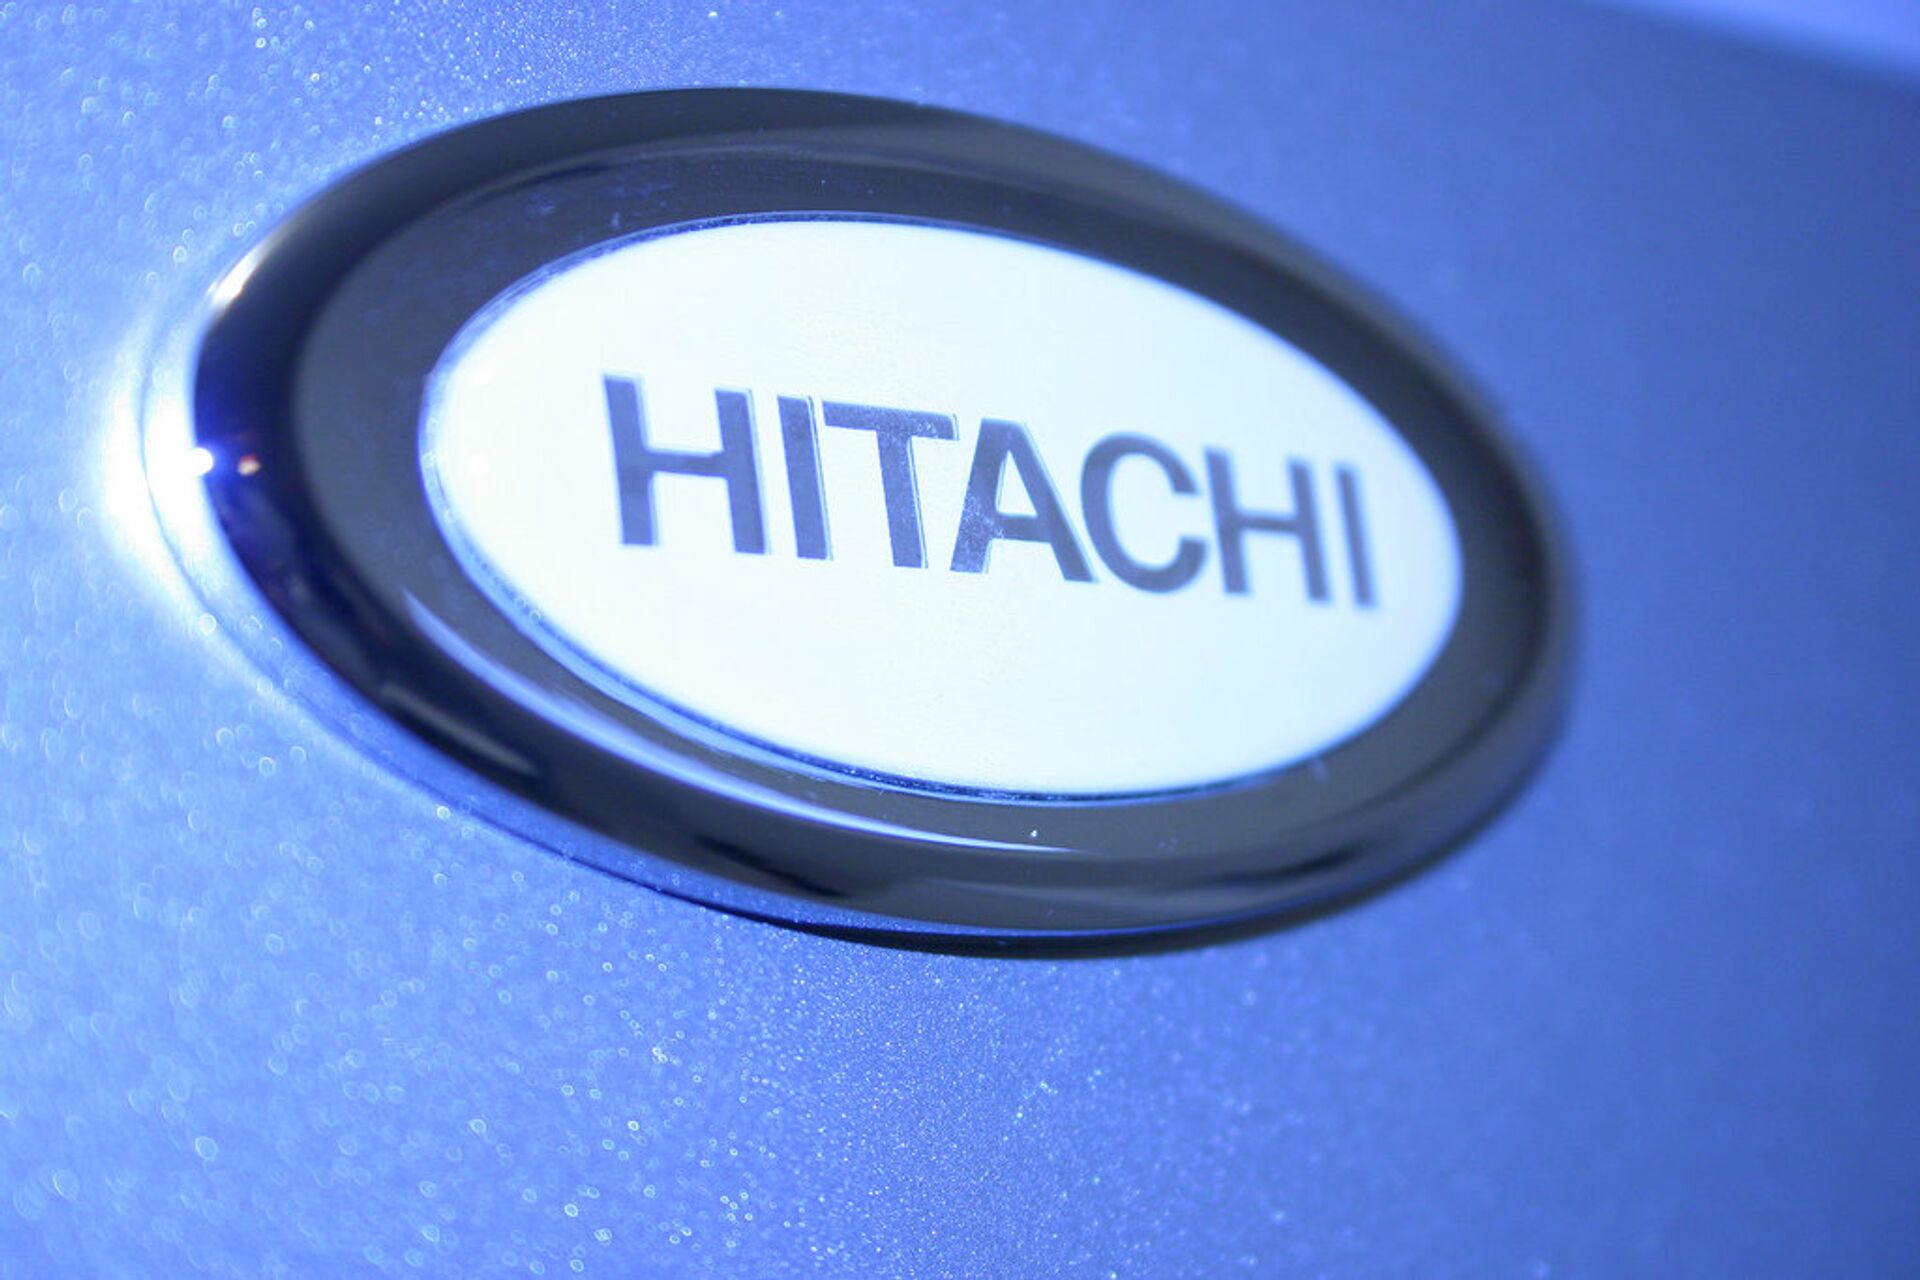 Hitachi - ПРАЙМ, 1920, 10.03.2022